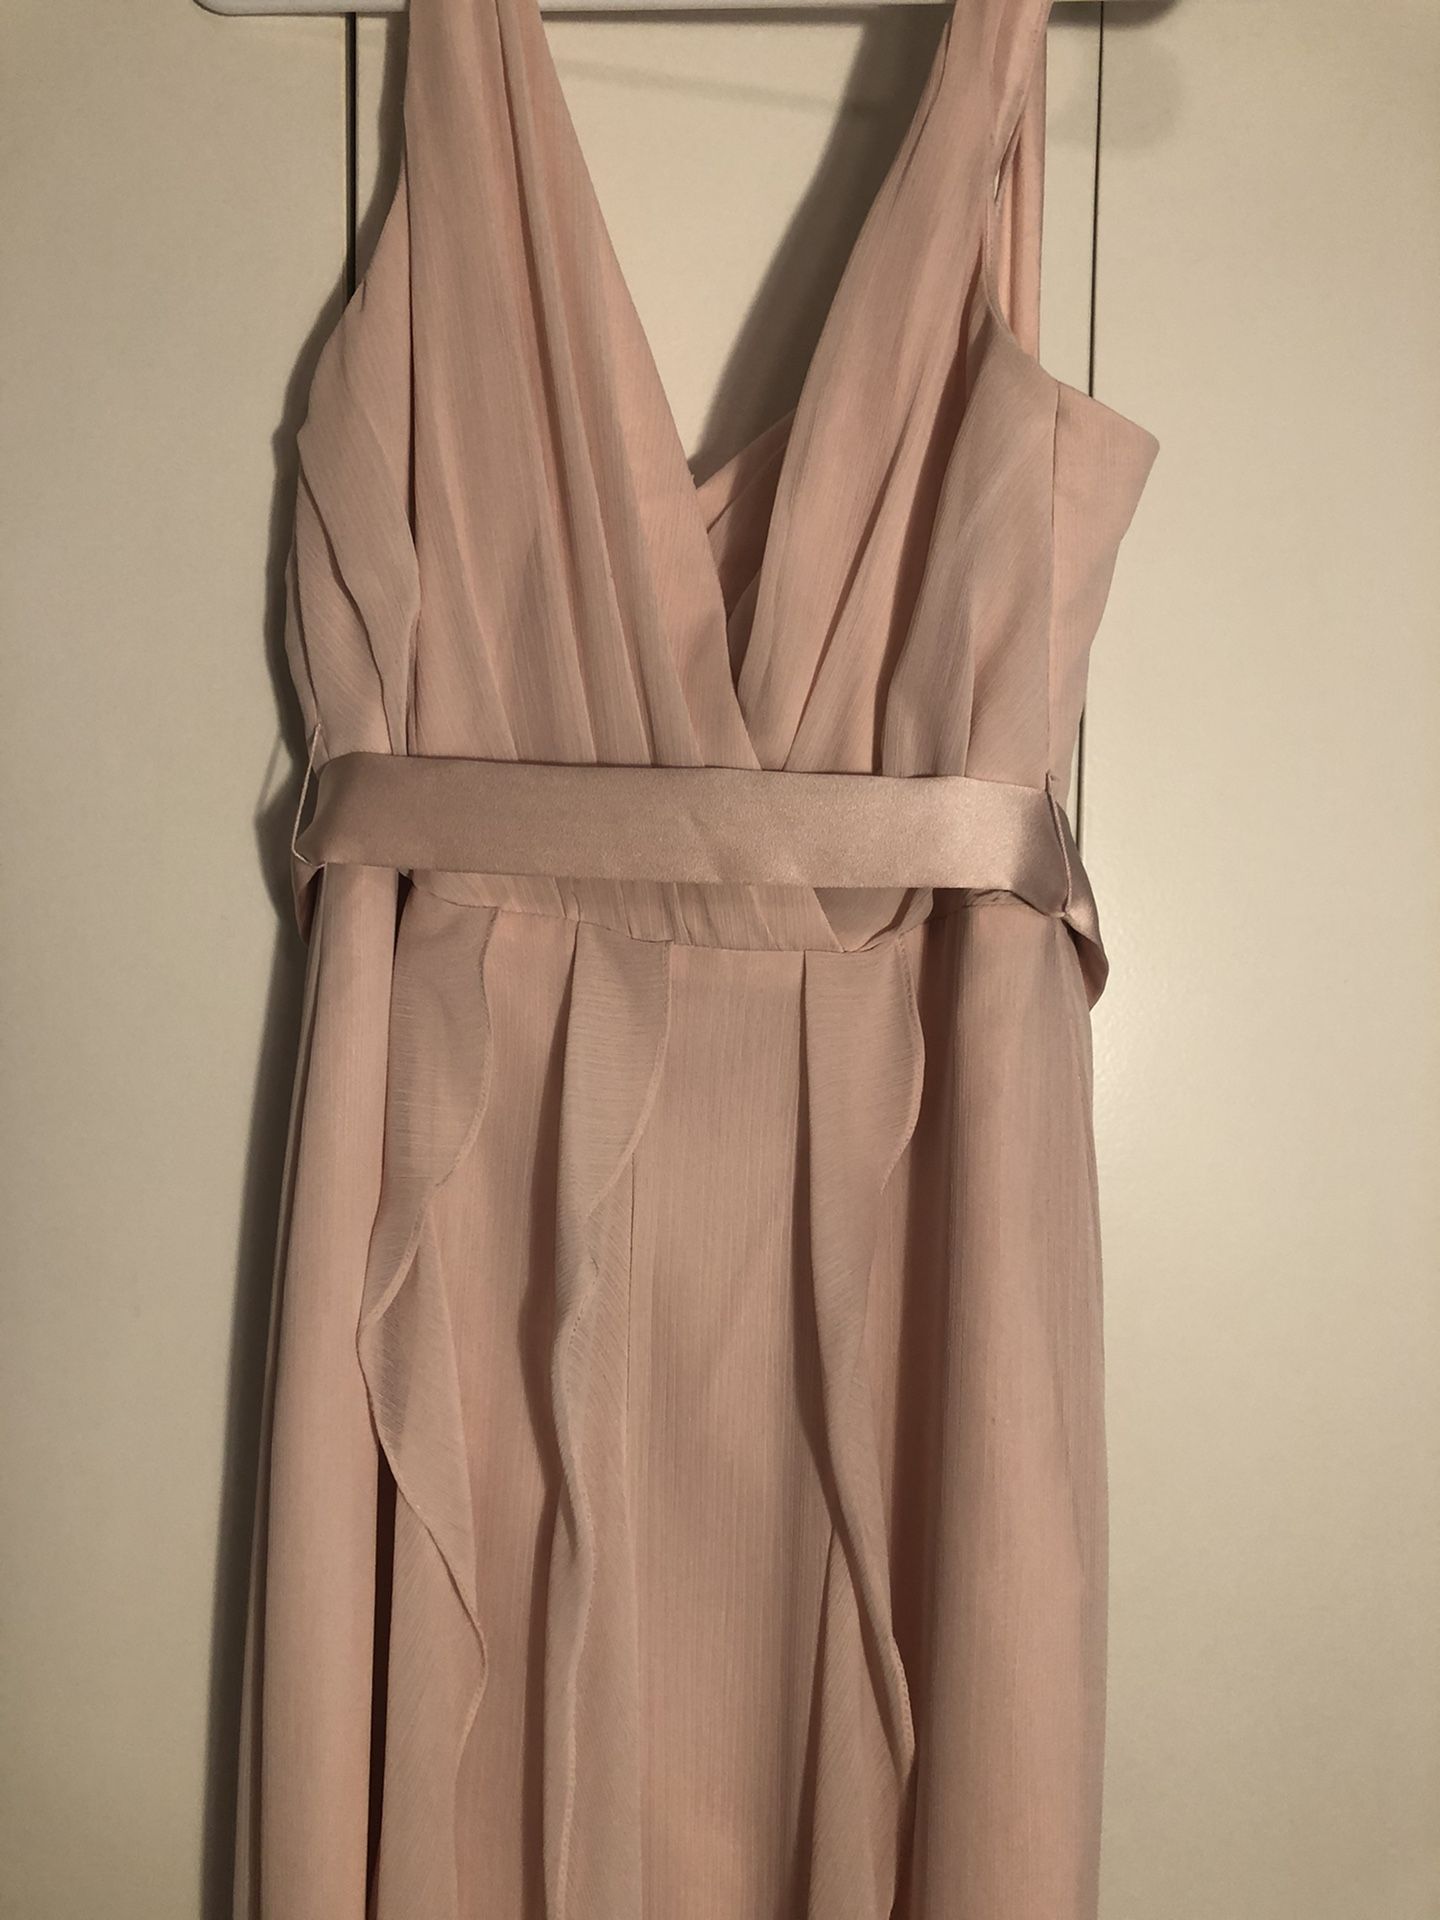 Vera Wang Blush Color size 8 Formal Dress